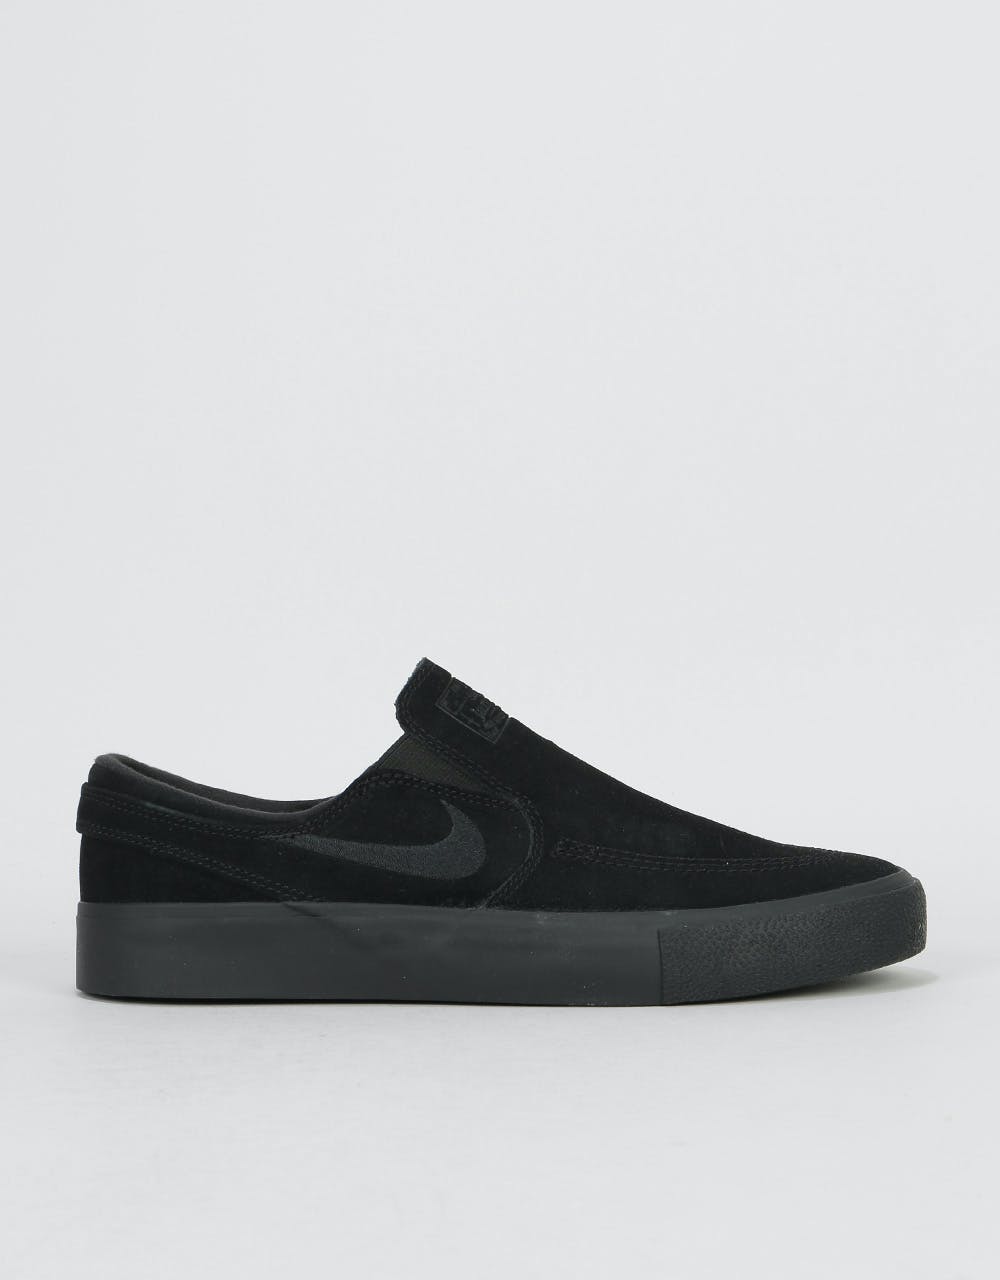 Nike SB Zoom Janoski Slip RM Skate Shoes - Black/Black-Black-Black